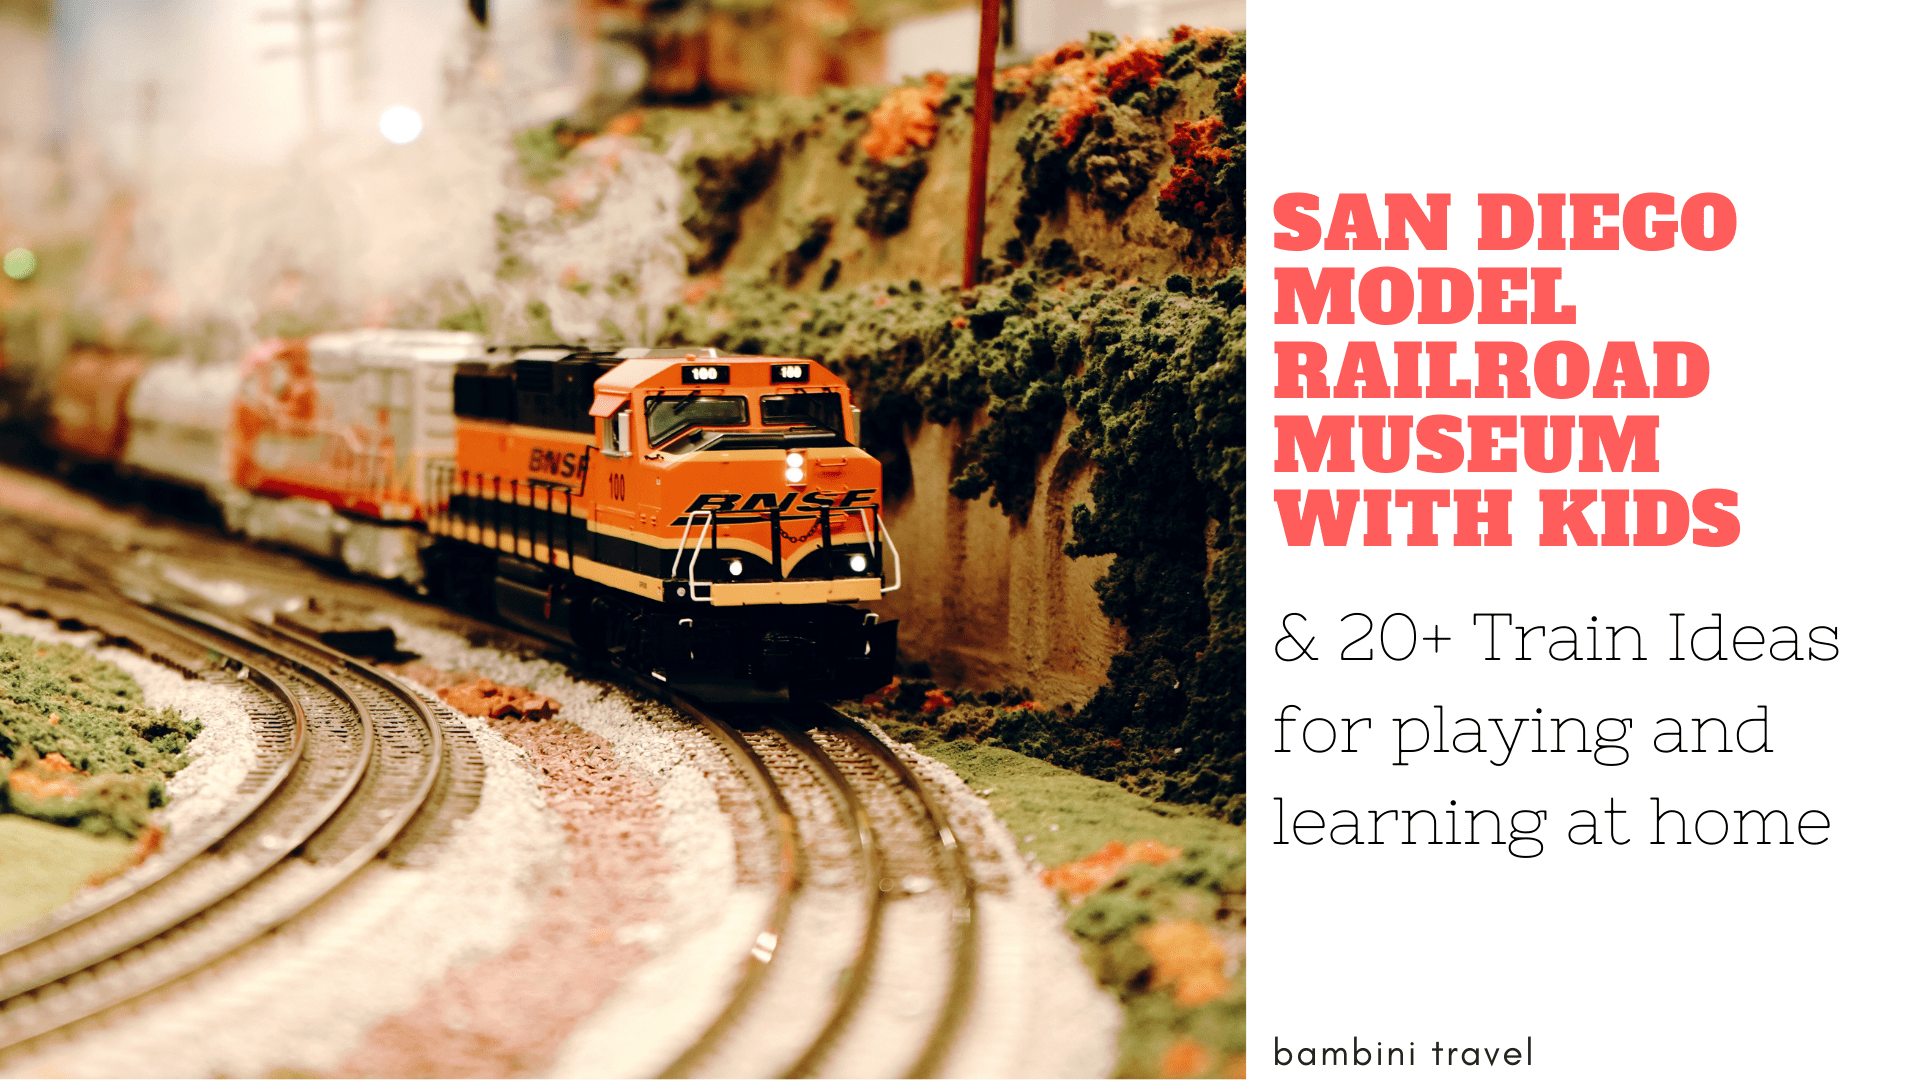 San Diego Model Railroad Museum and 20+ Terrific Train Ideas for Kids